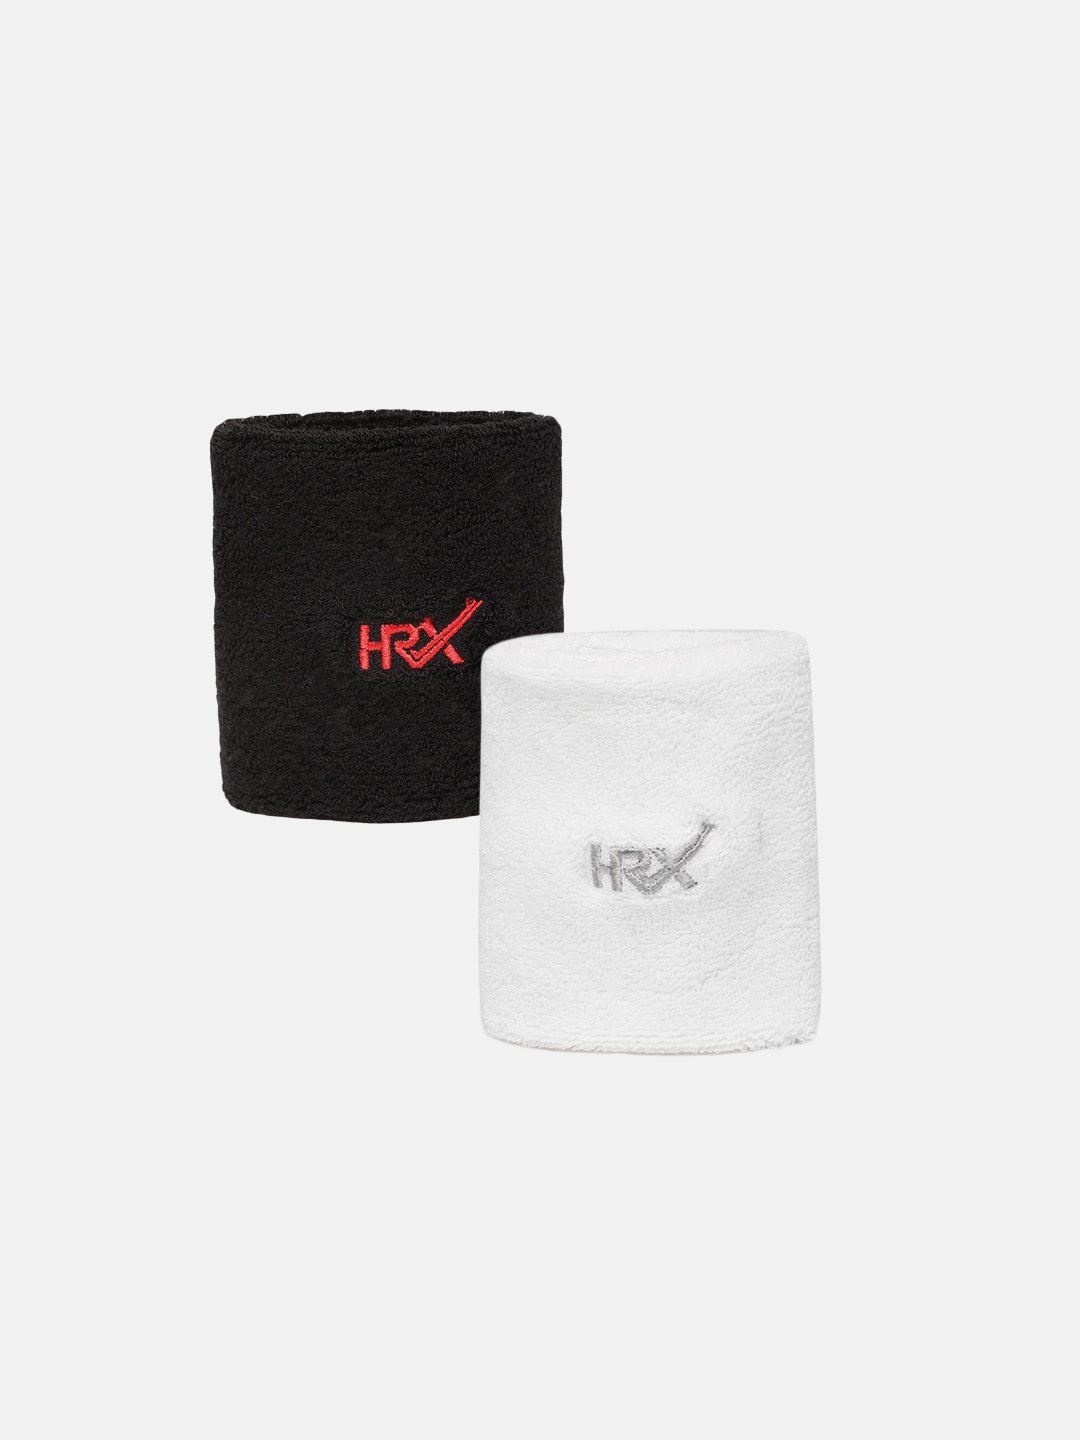 HRX by Hrithik Roshan Unisex Set of 2 Black & White Performance Wristbands Price in India